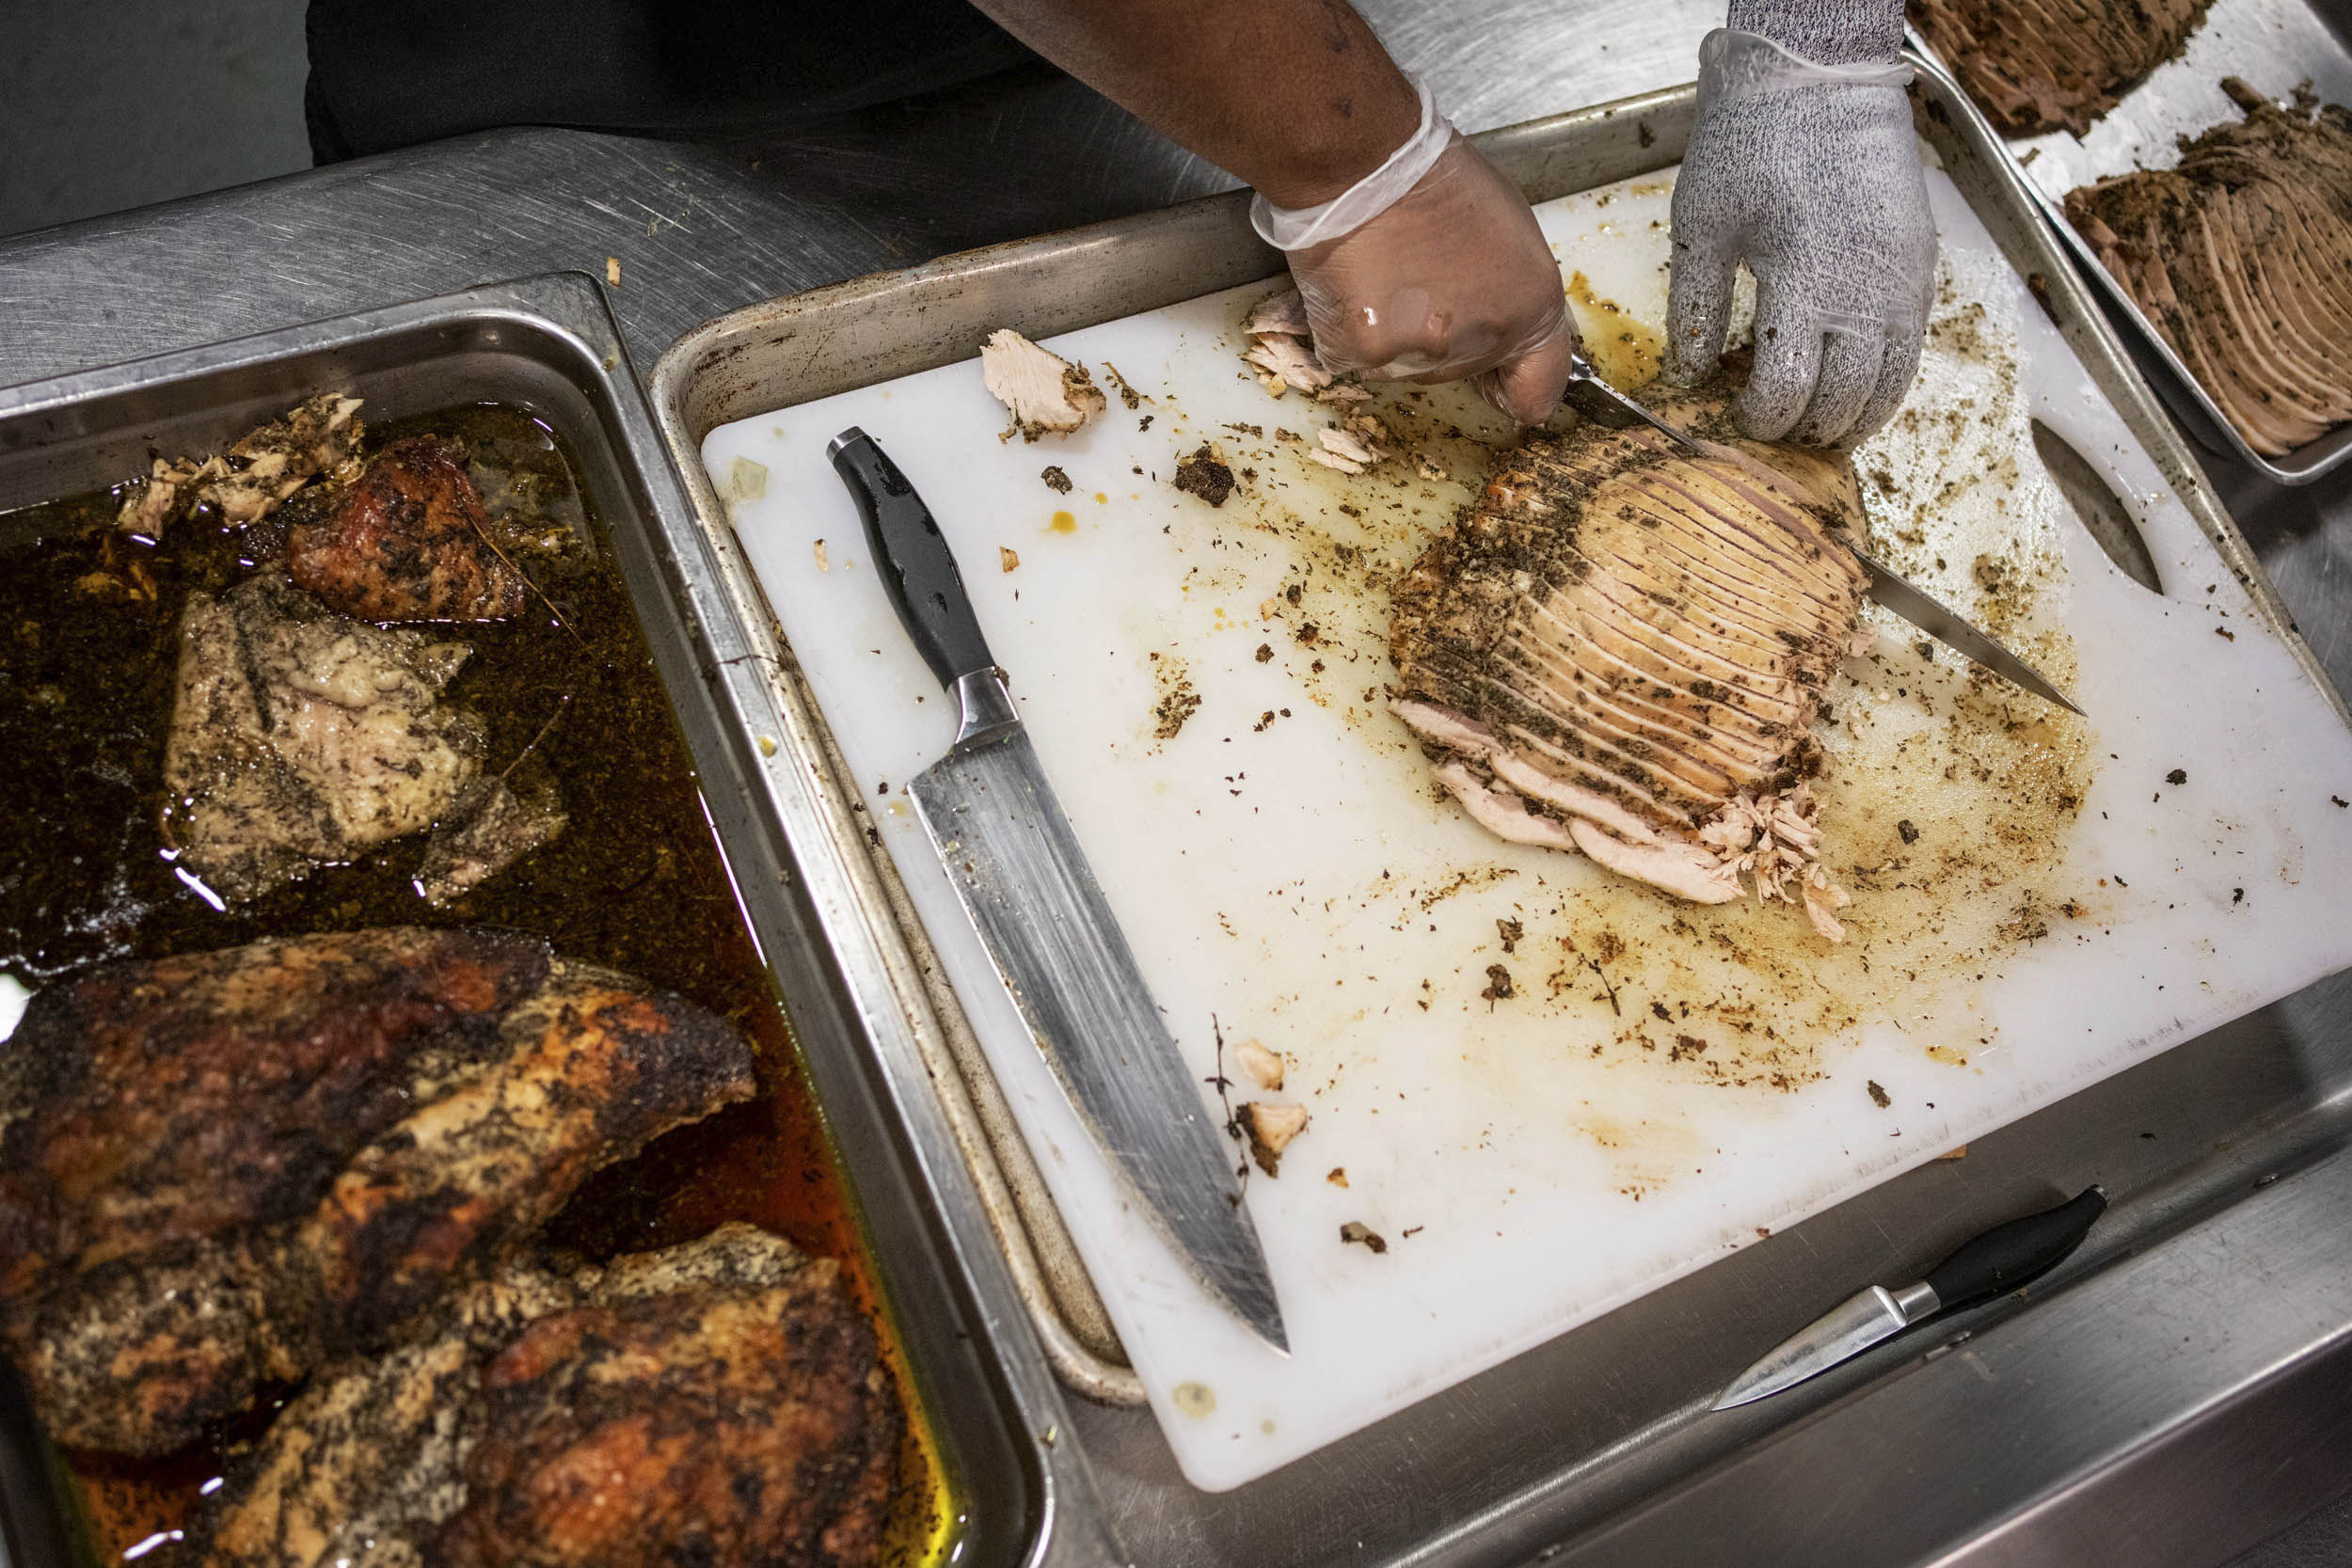 Food Service Member slicing Herbed Turkey for Thanksgivin